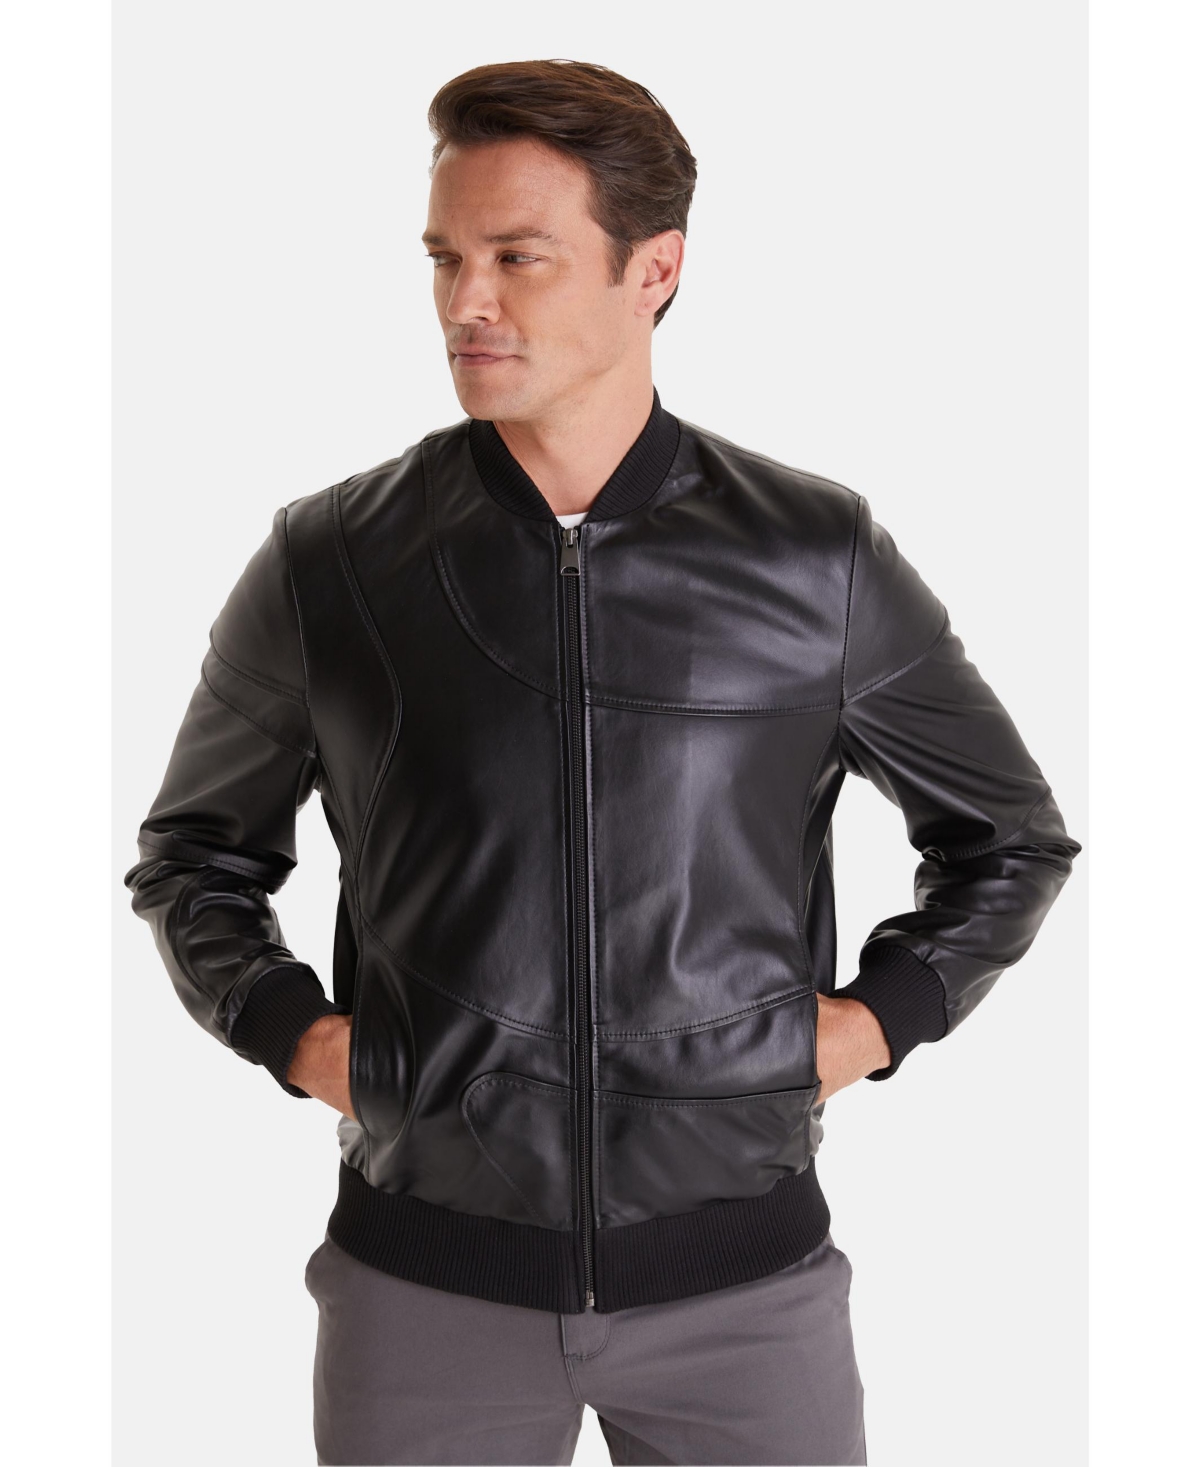 Men's Leather Fashion Jacket, Black - Black